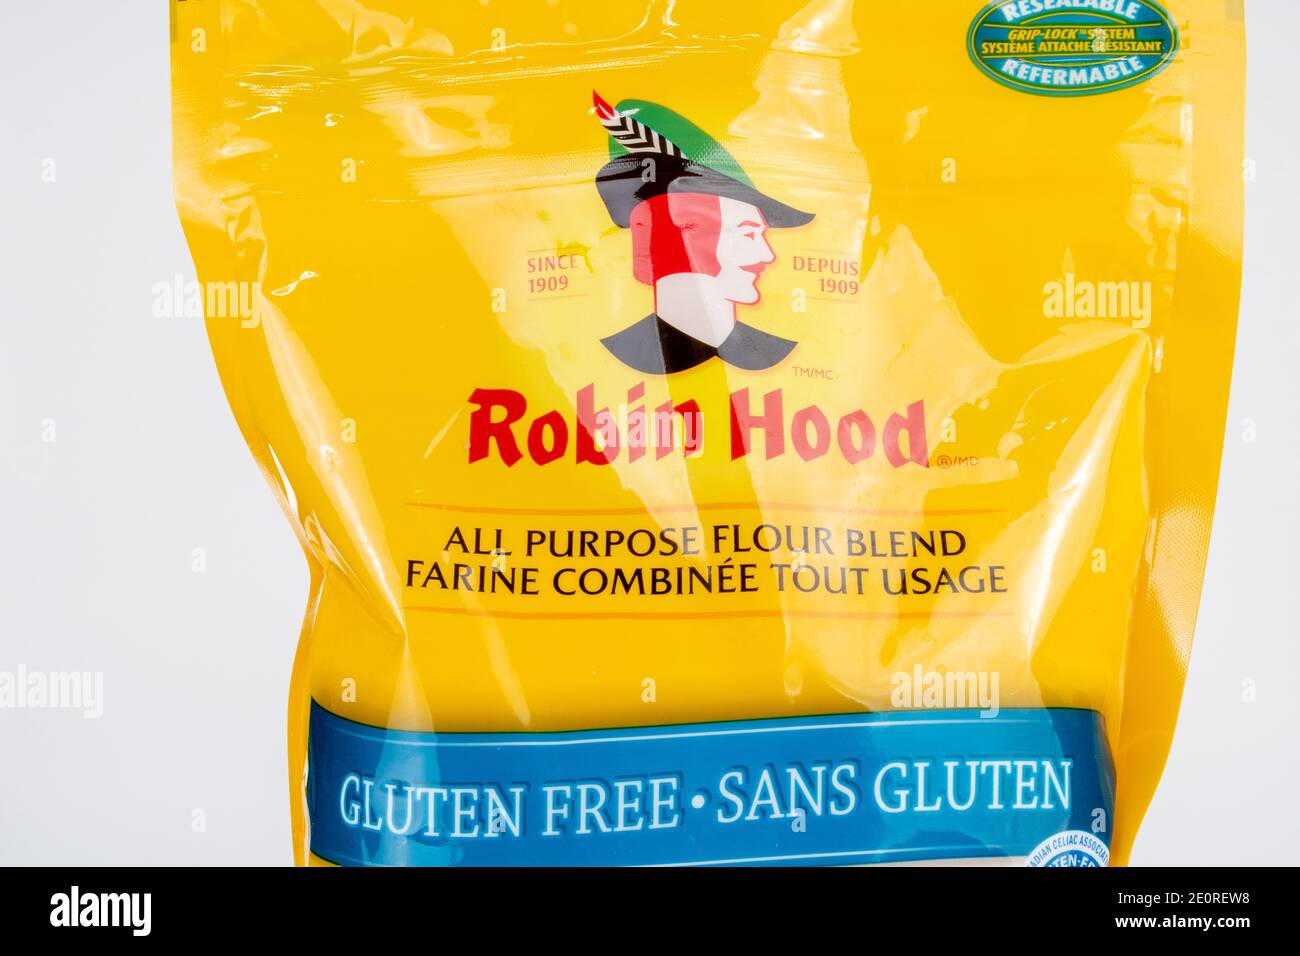 Robin Hood all-purpose flour blend package Stock Photo